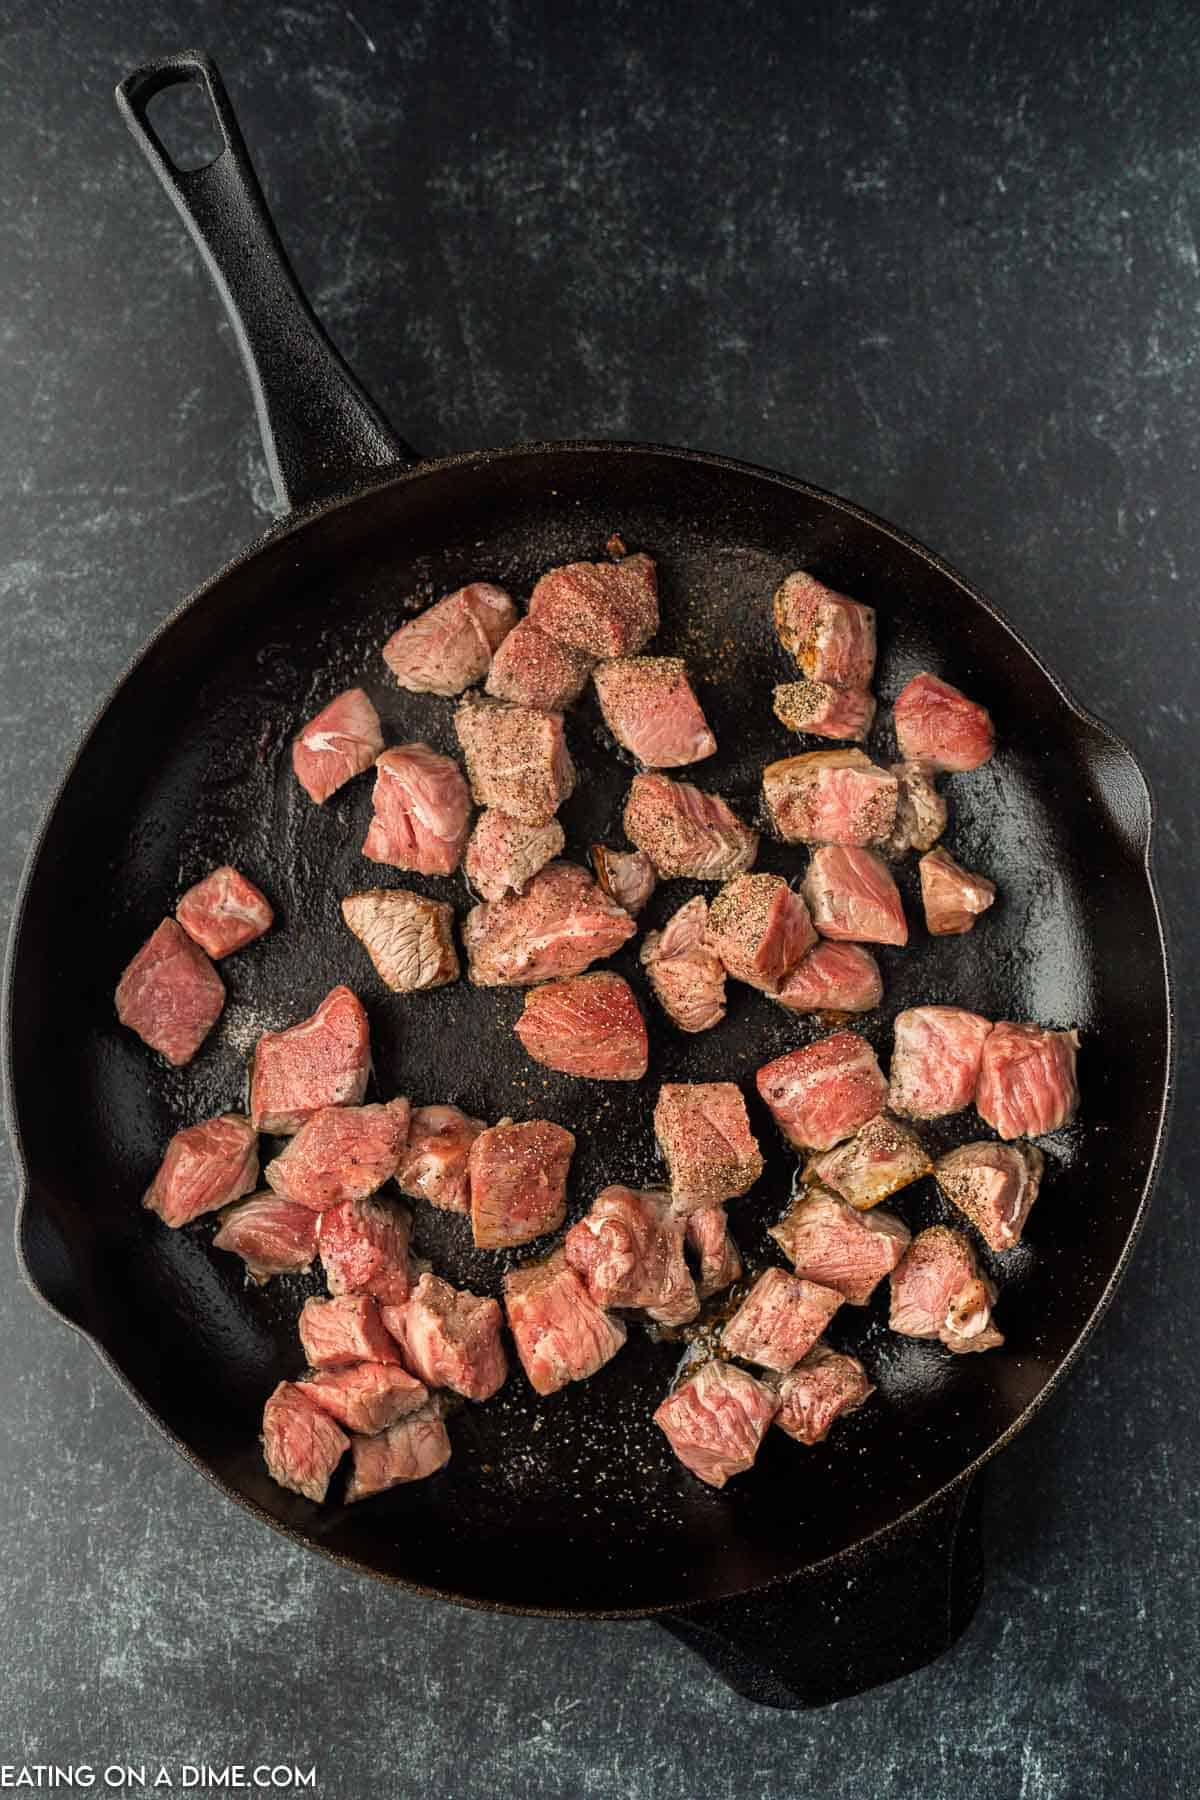 Placing steak bites in skillet